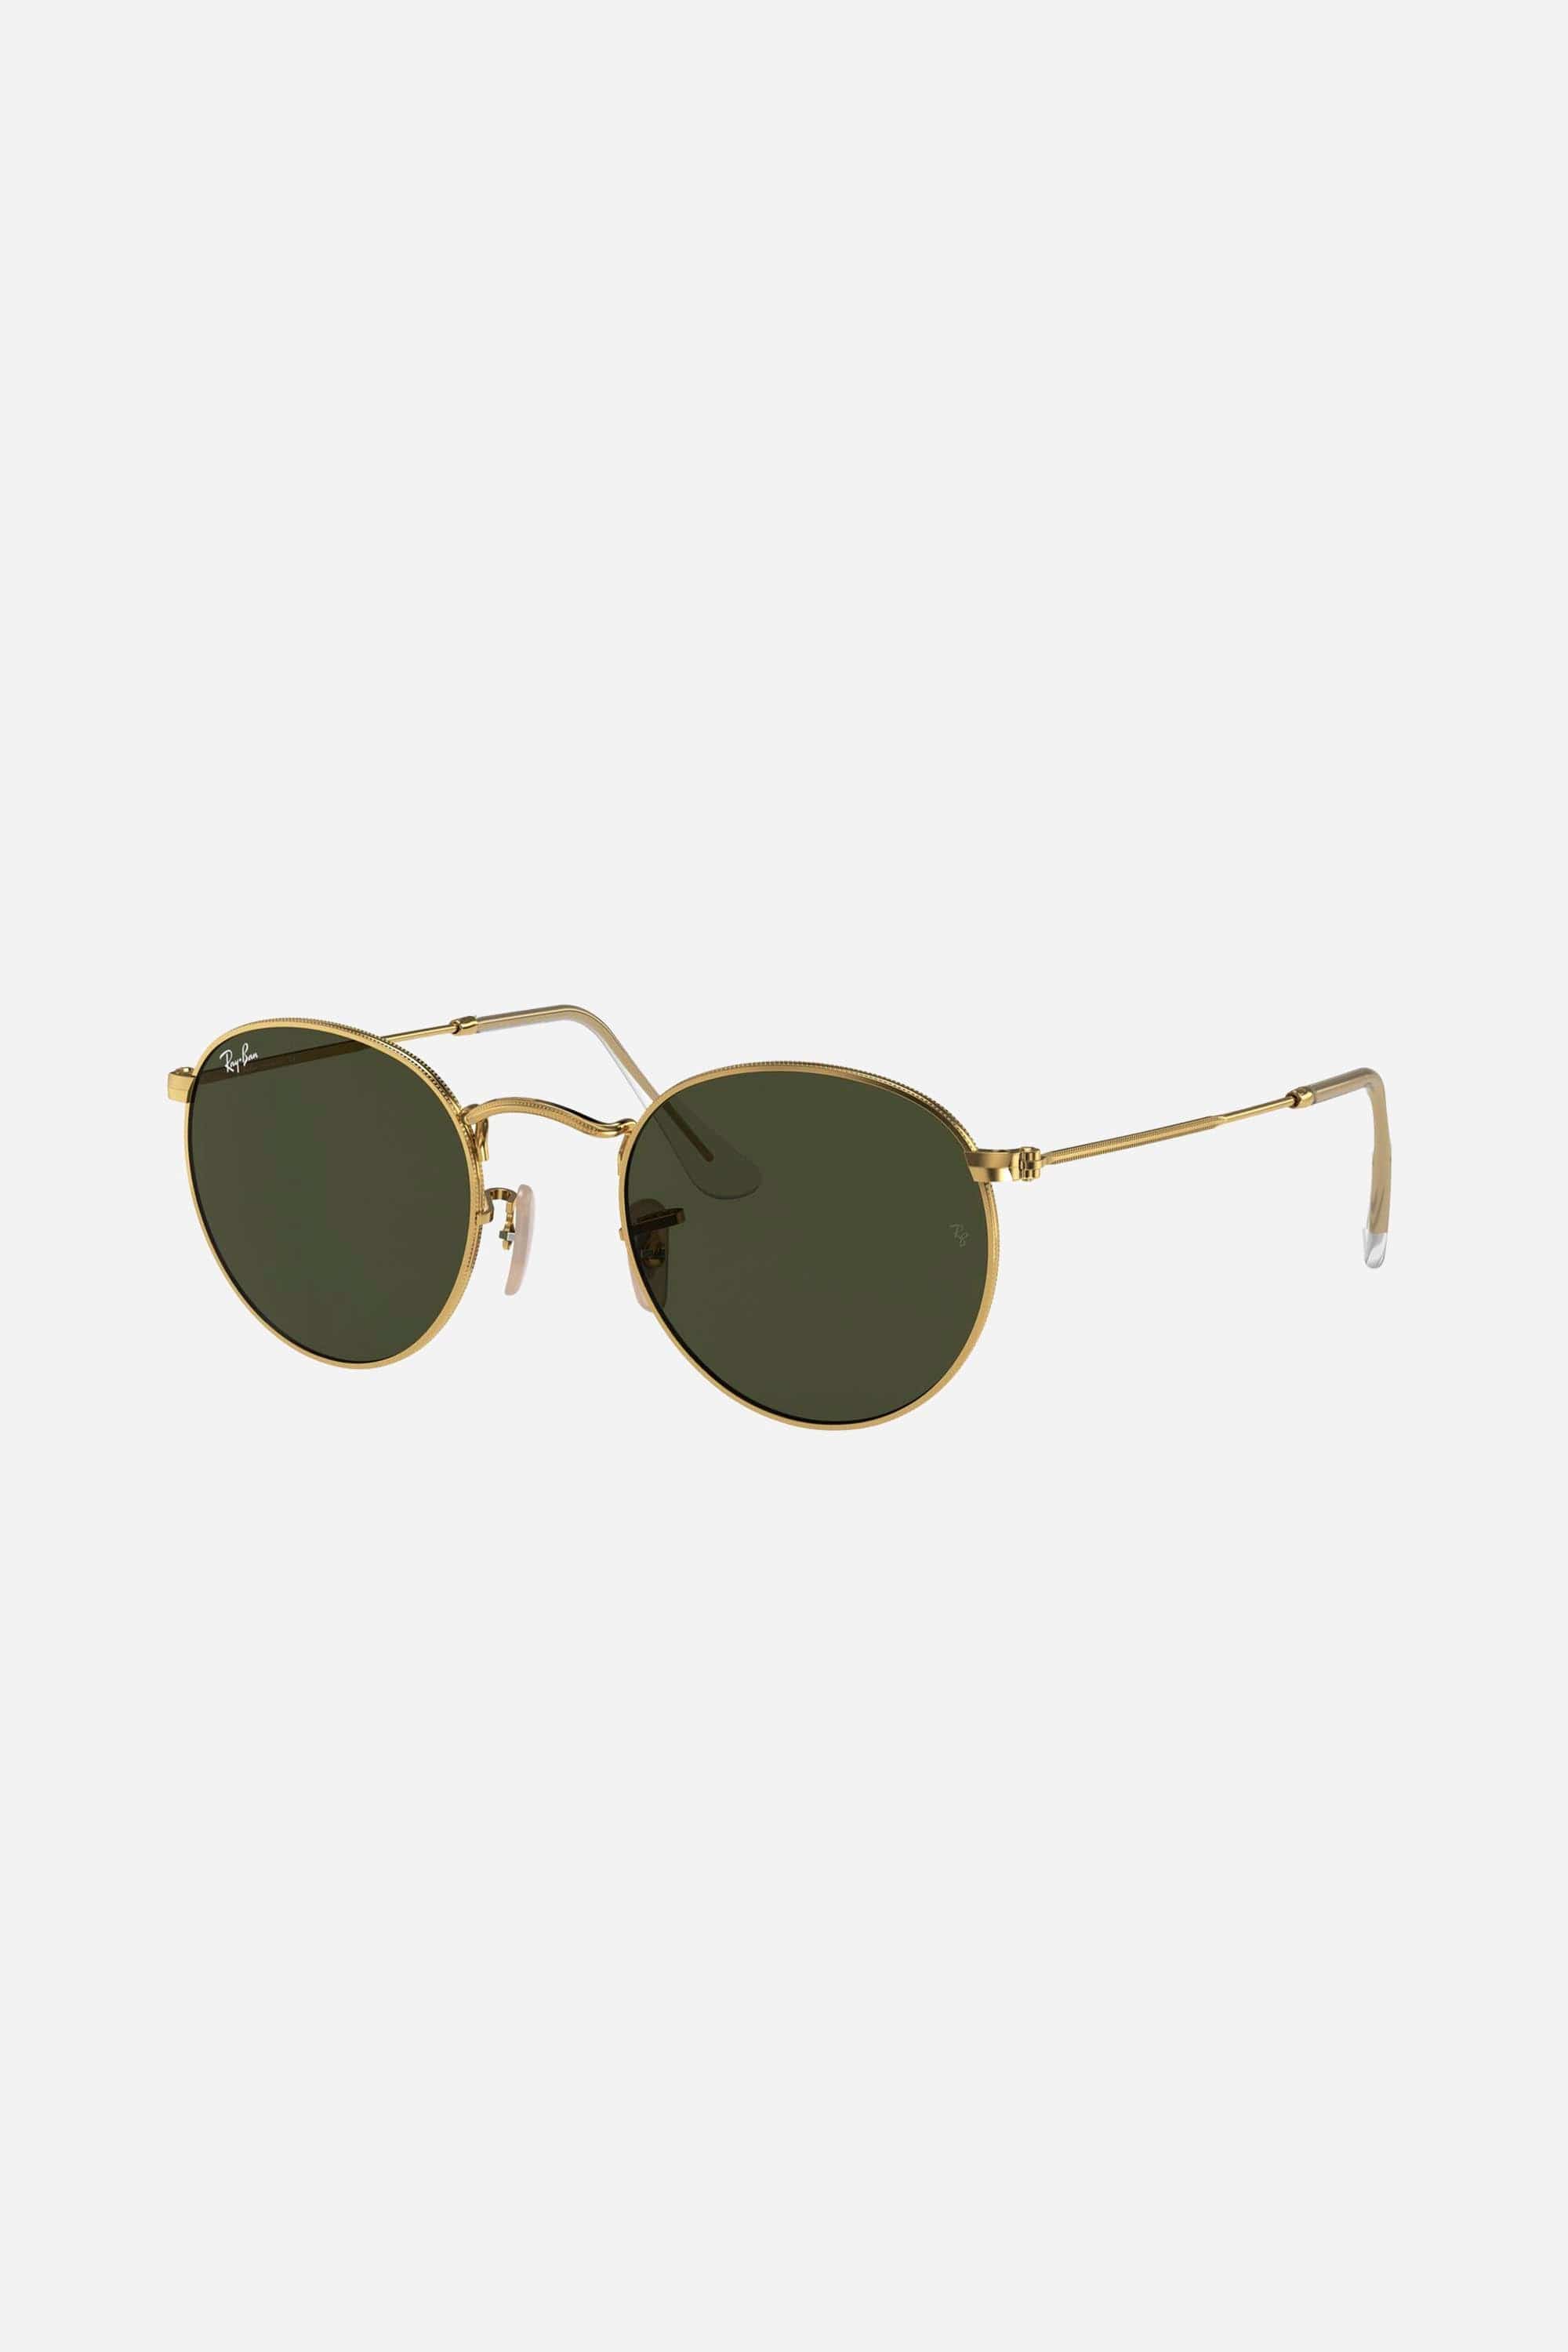 Ray Ban RB3447 gold round sunglasses - Eyewear Club